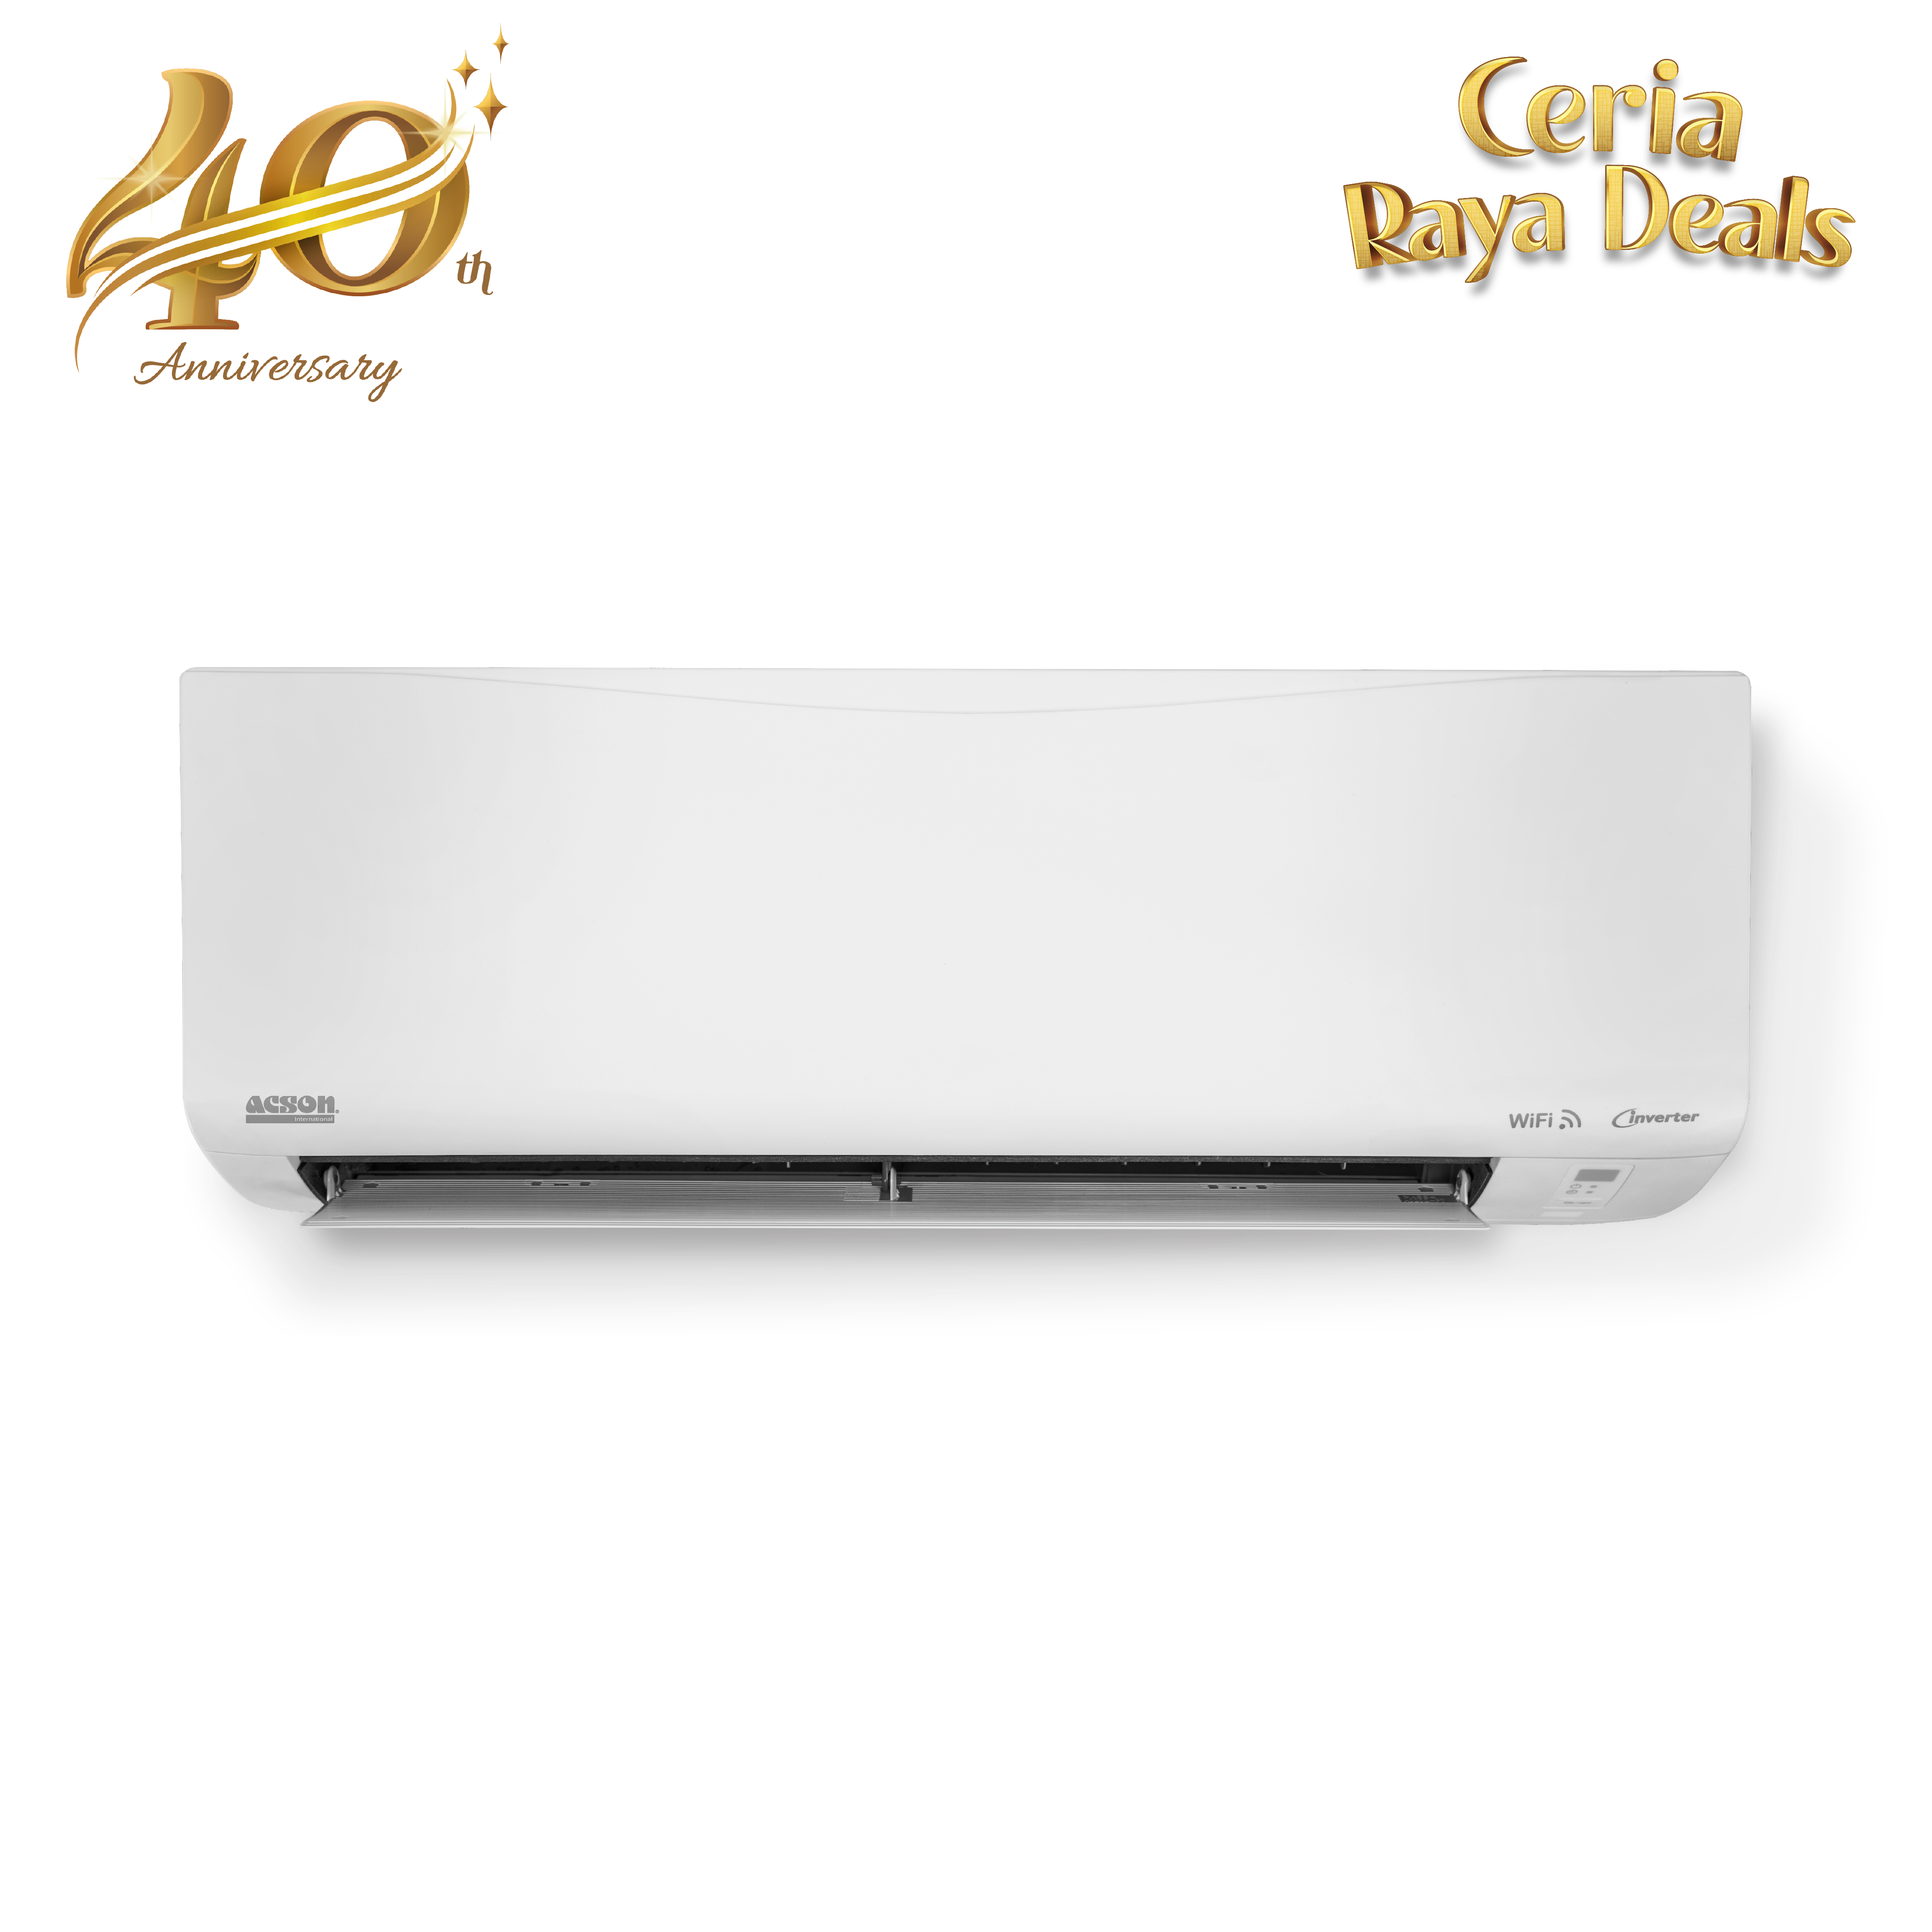 REINO Inverter (1.0HP) Air Conditioner R32 WiFi